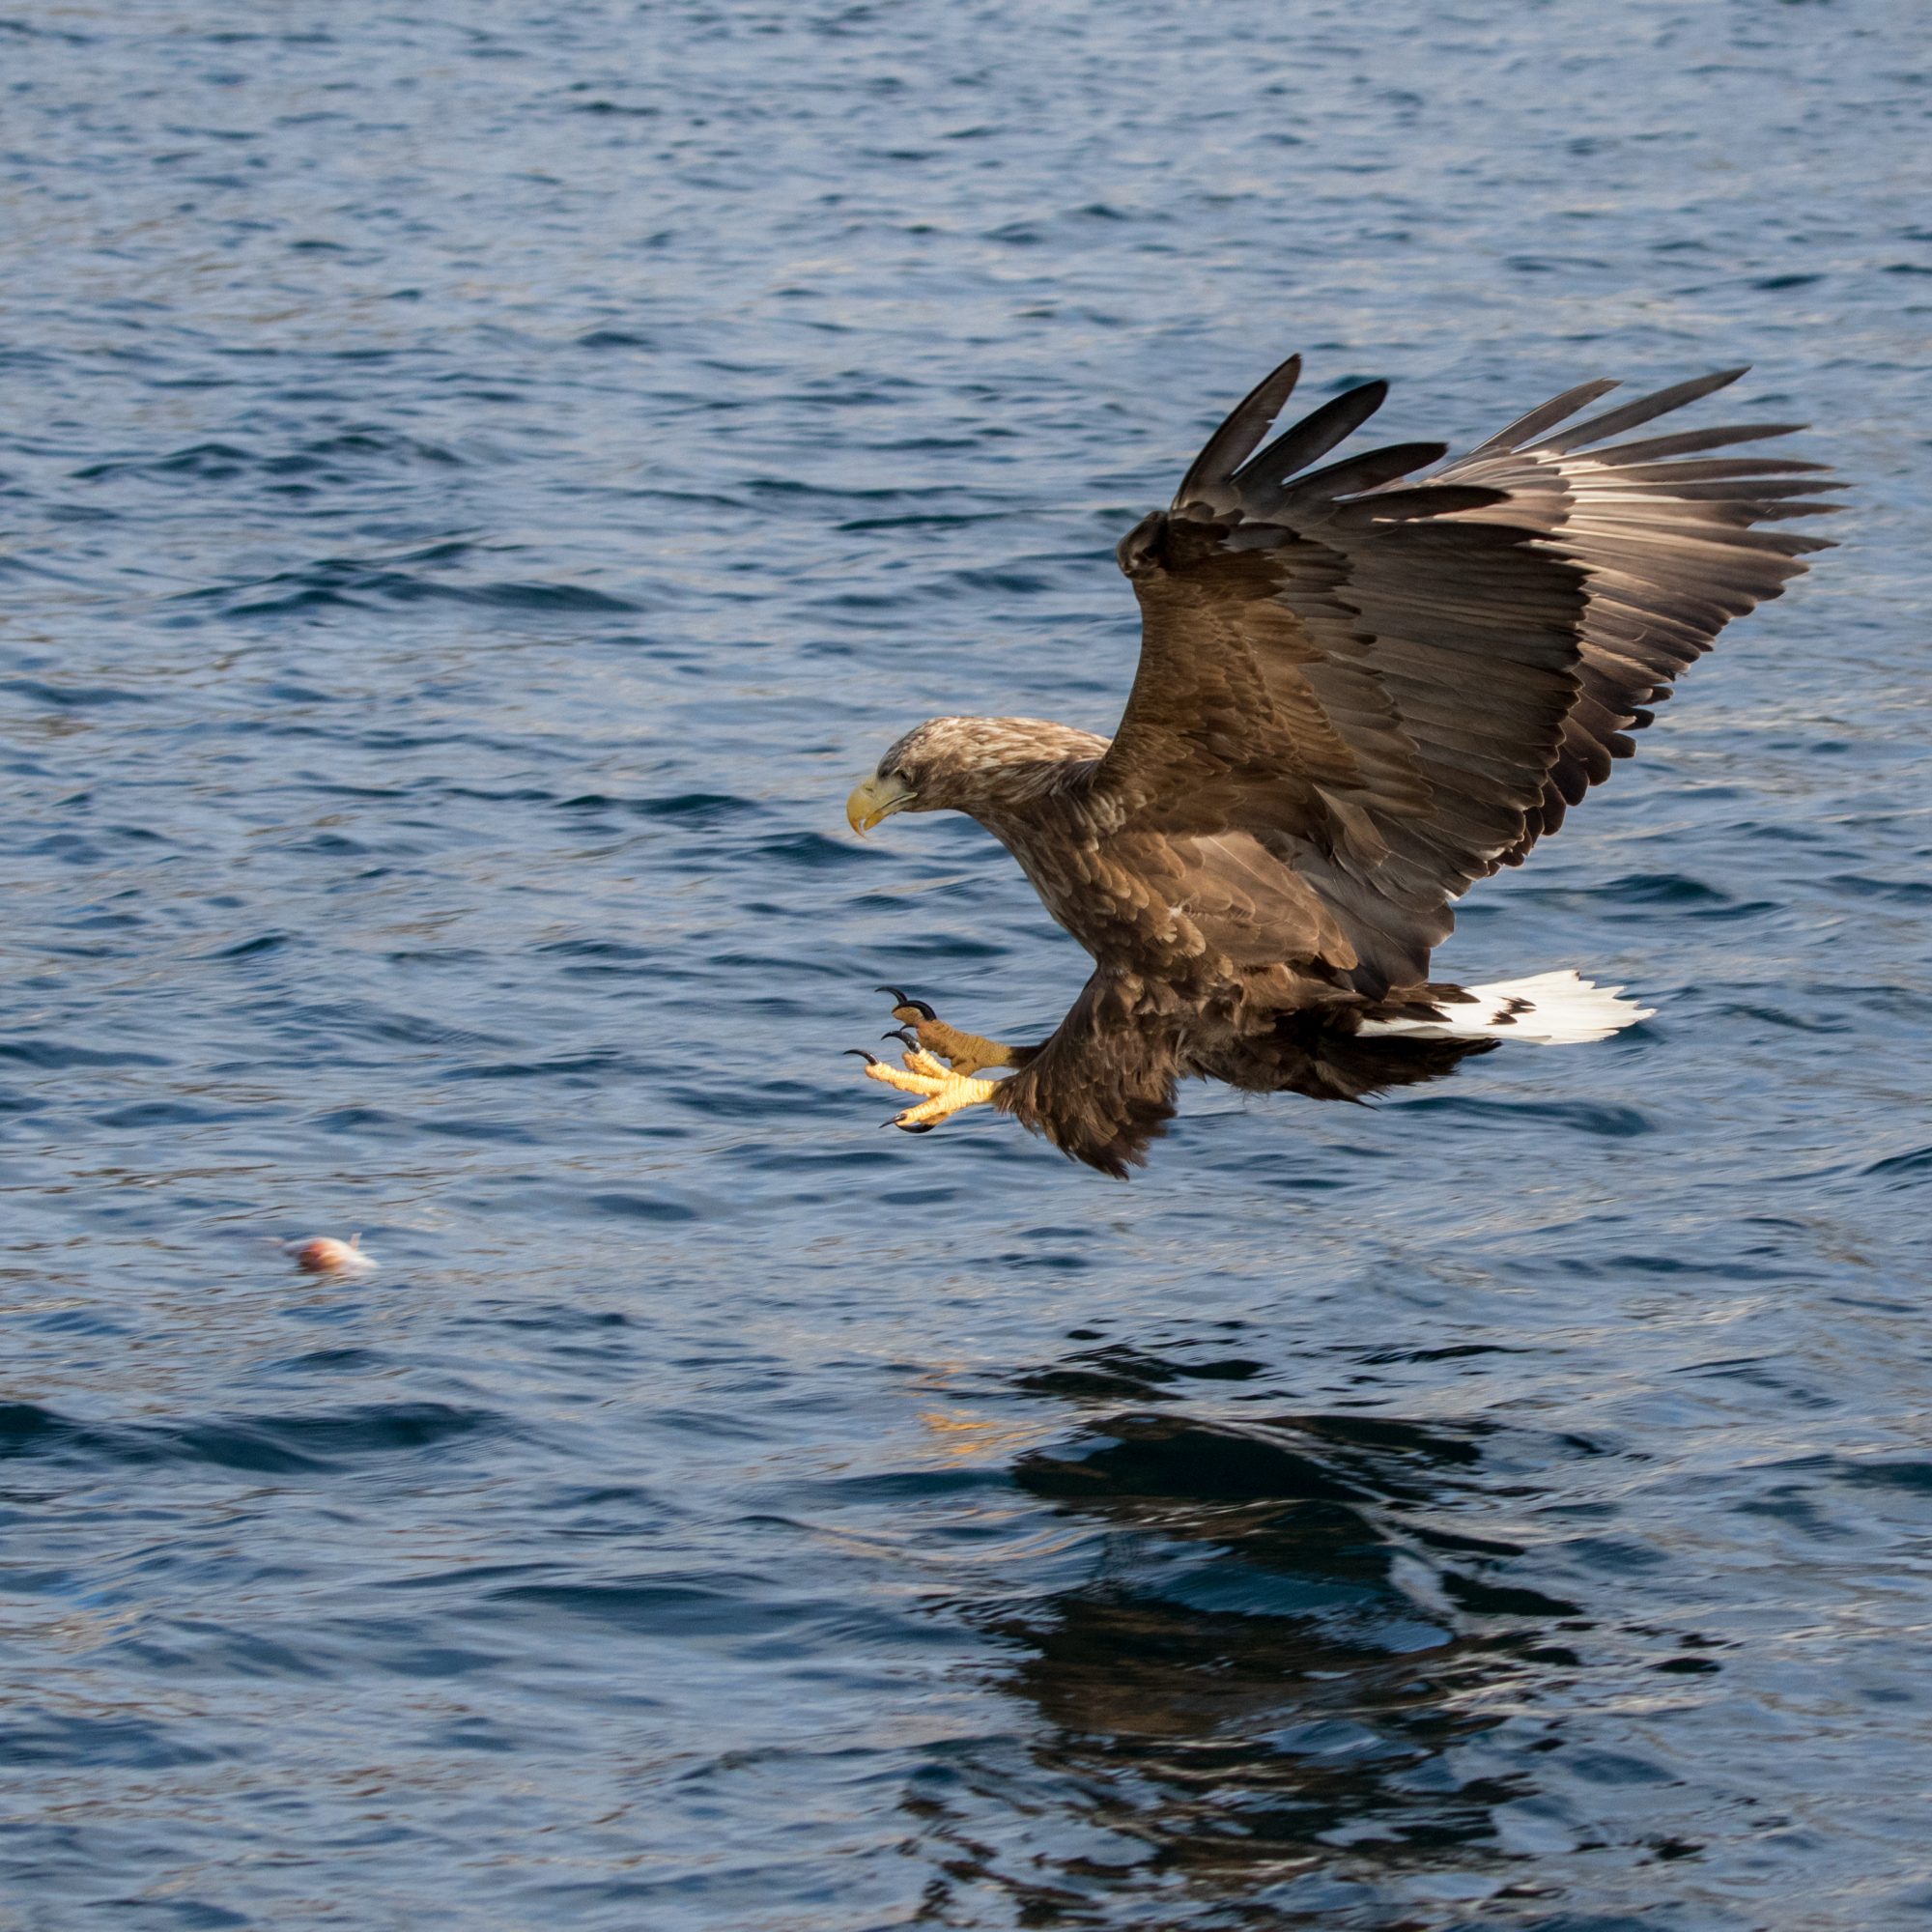 White-Tailed Sea Eagles go fishing – Norway 2016